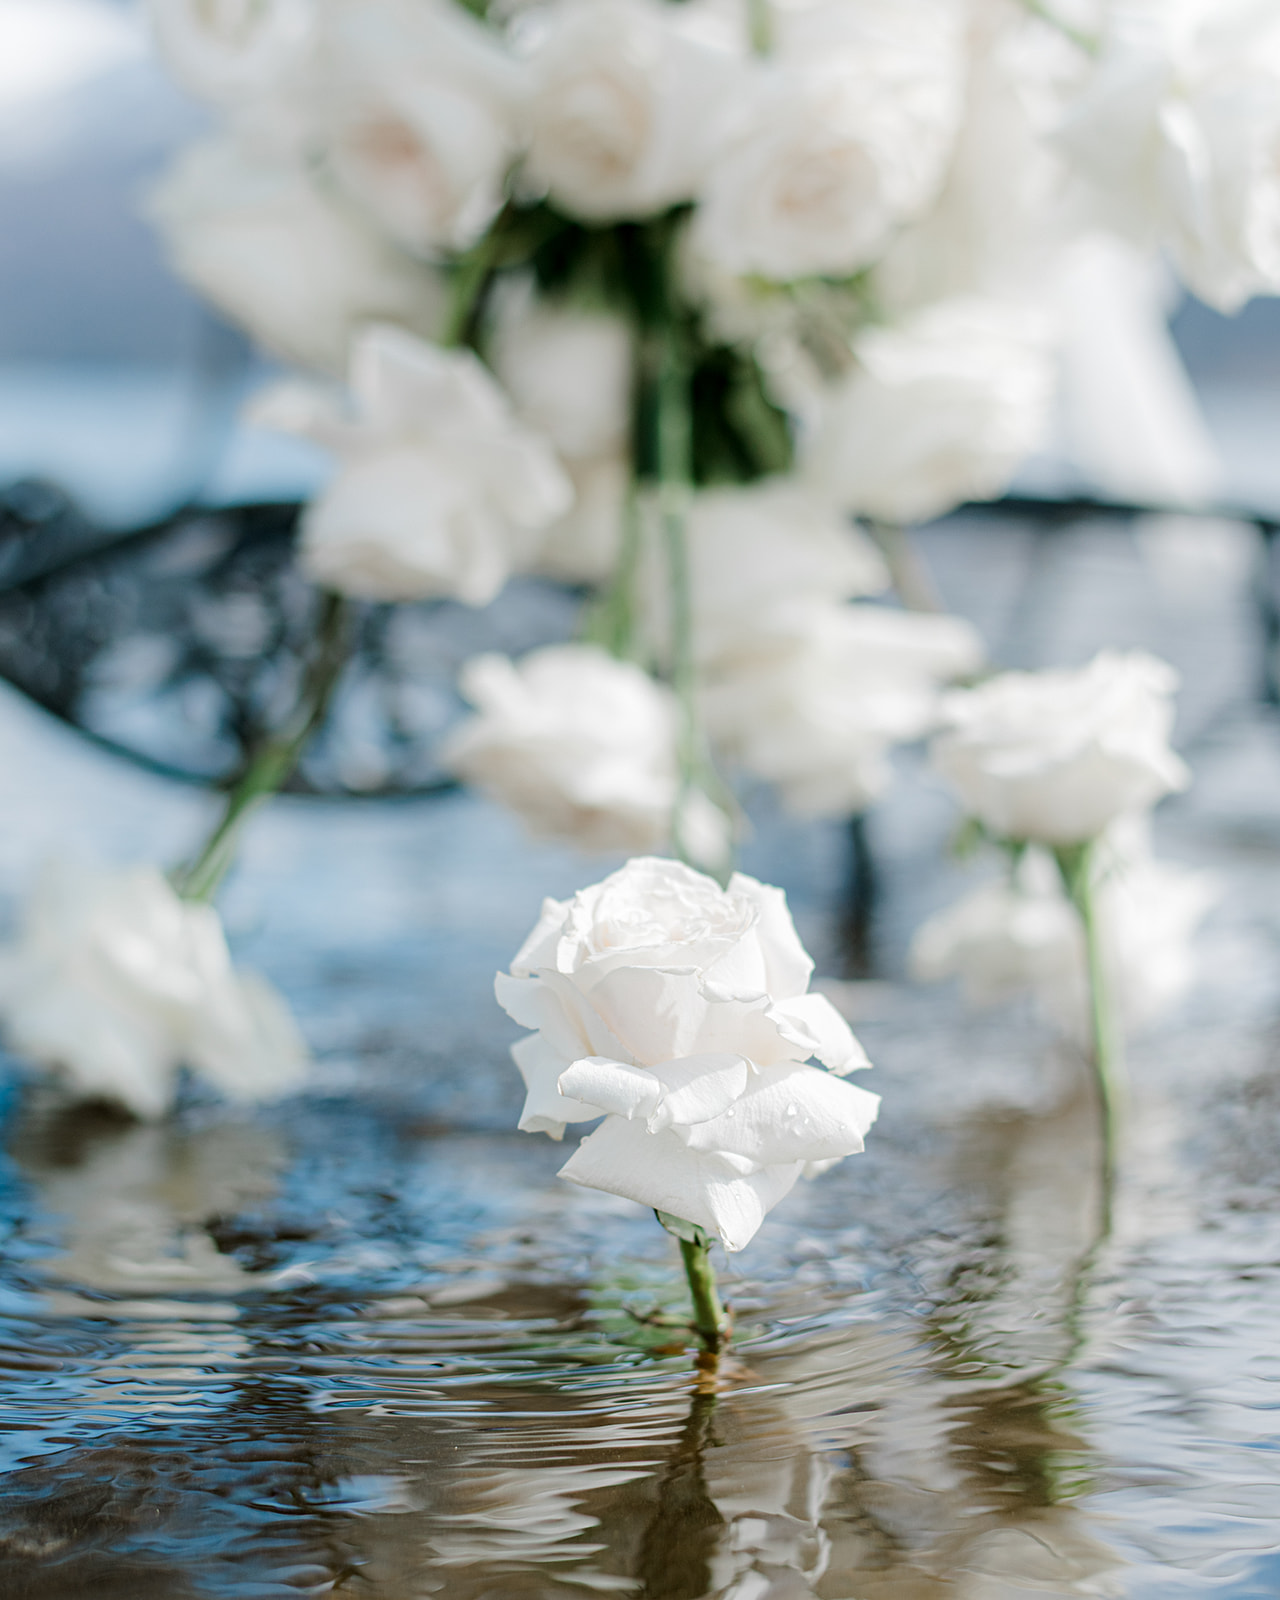 Ethereal elegant wedding inspiration, coastal-inspired blues, whites, beiges and tan toned wedding inspiration, designed by Rebekah Brontë Designs featuring stunning floral elements by JAM Florals.